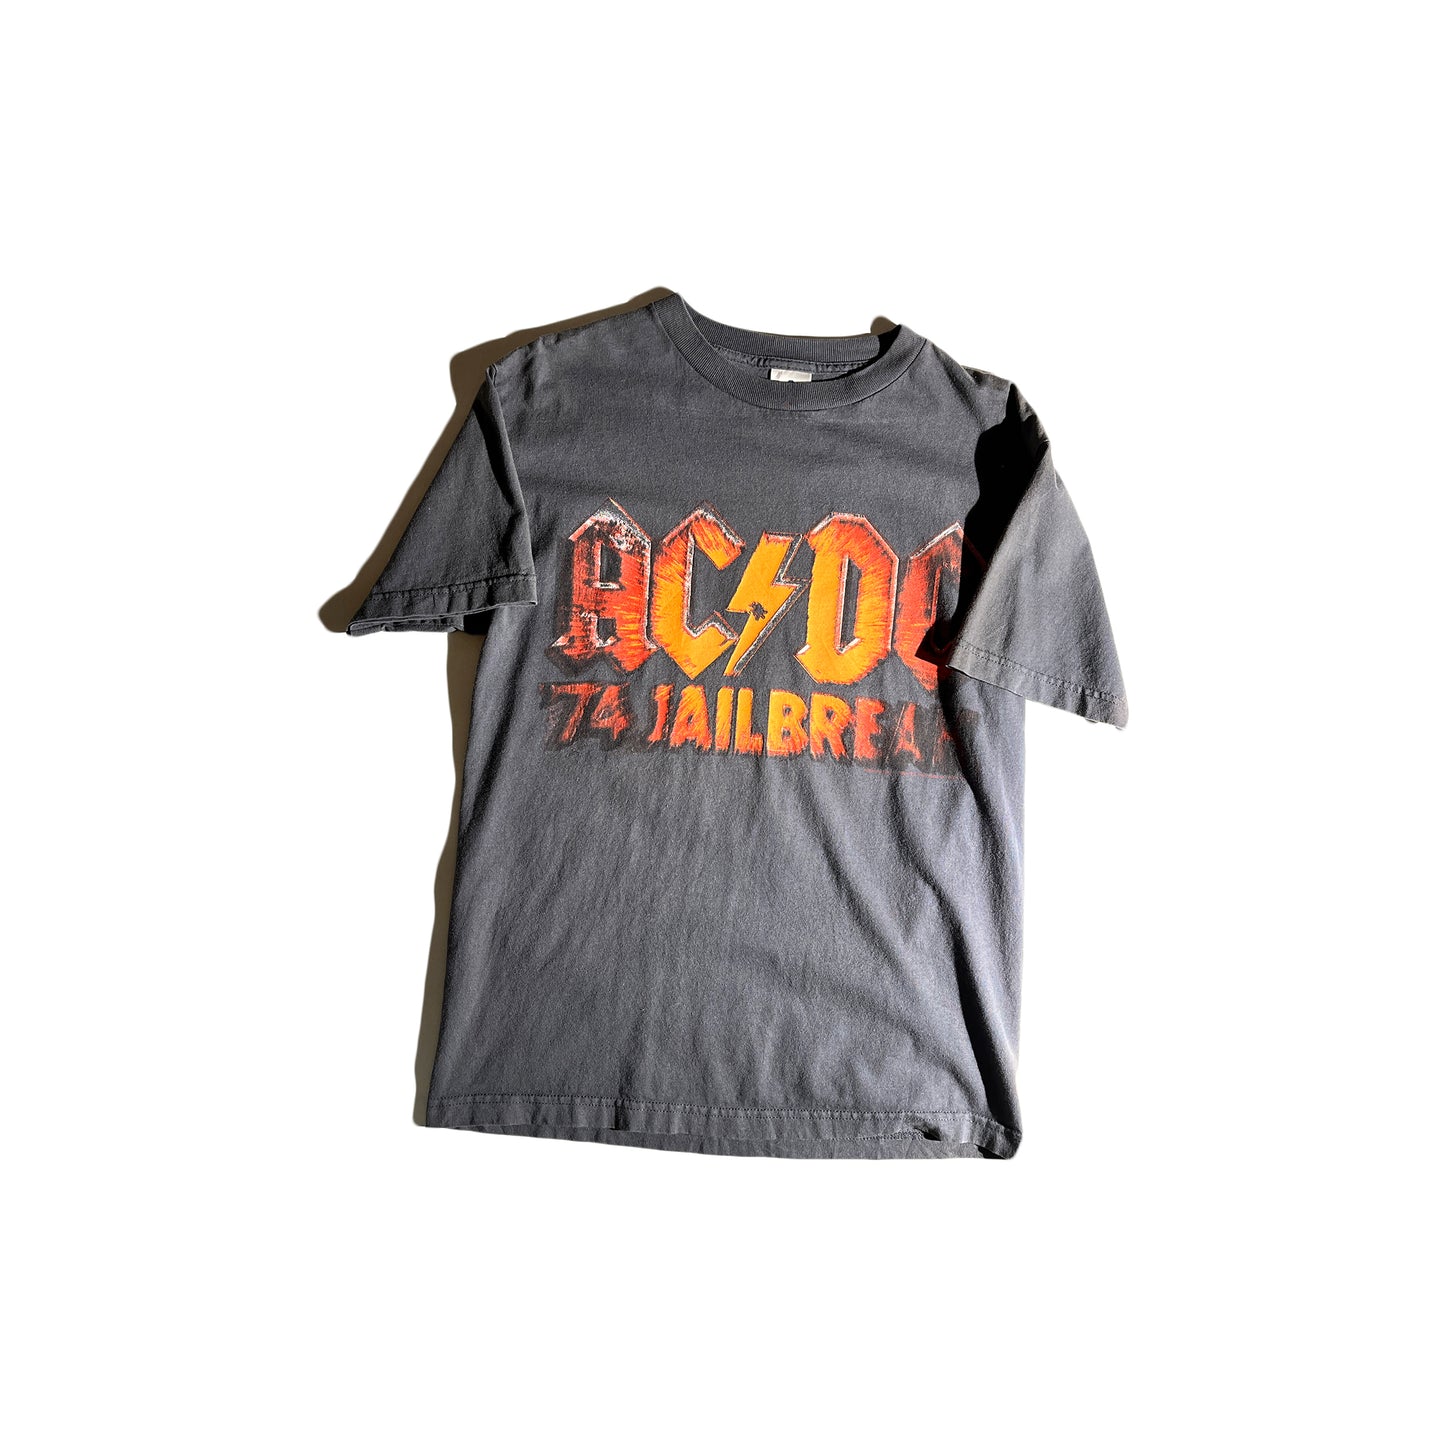 Vintage AC/DC Shirt Band '74 Jailbreak